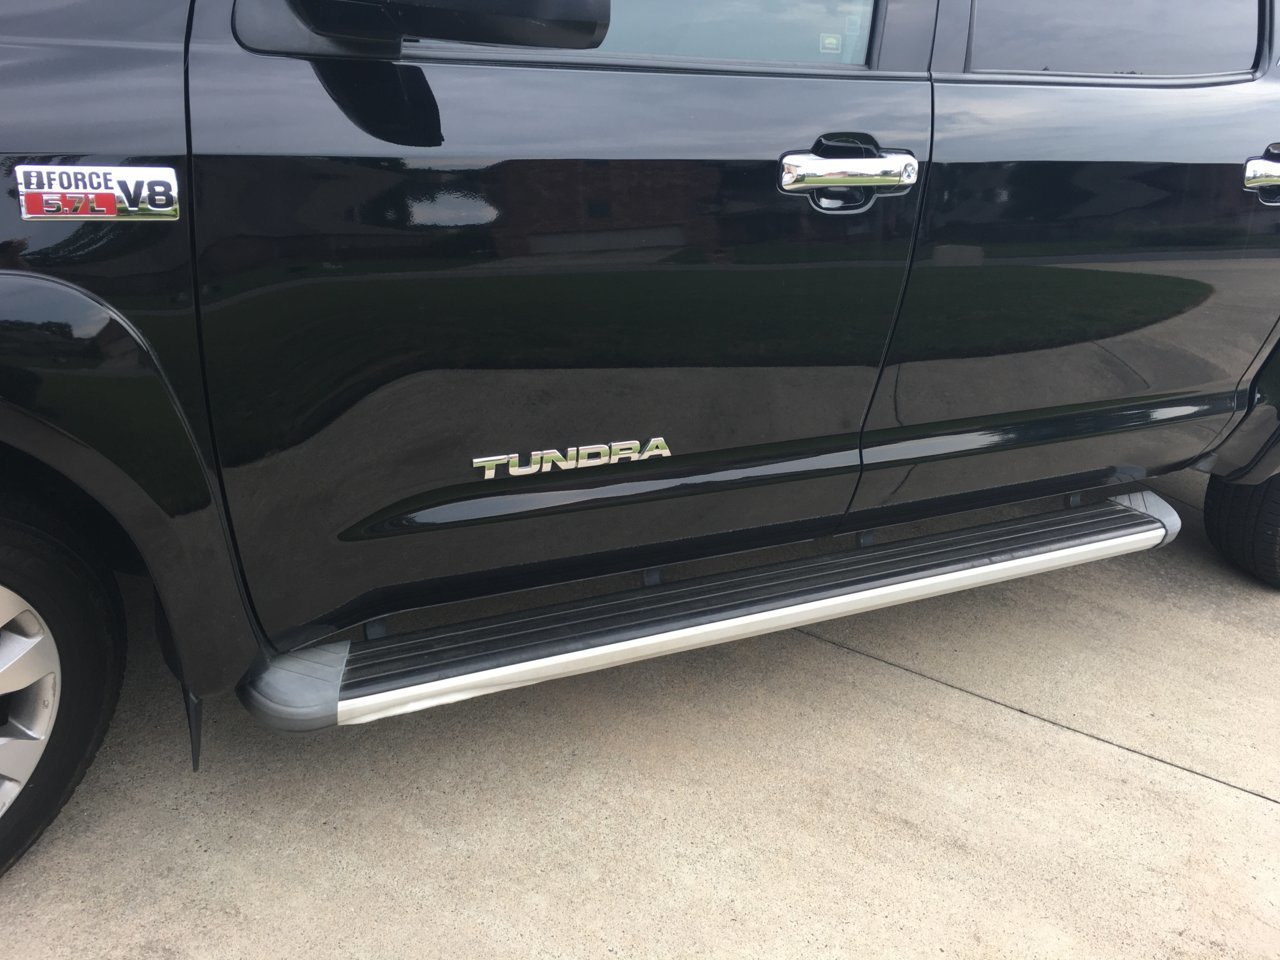 OEM Running Board Wanted | Toyota Tundra Forum